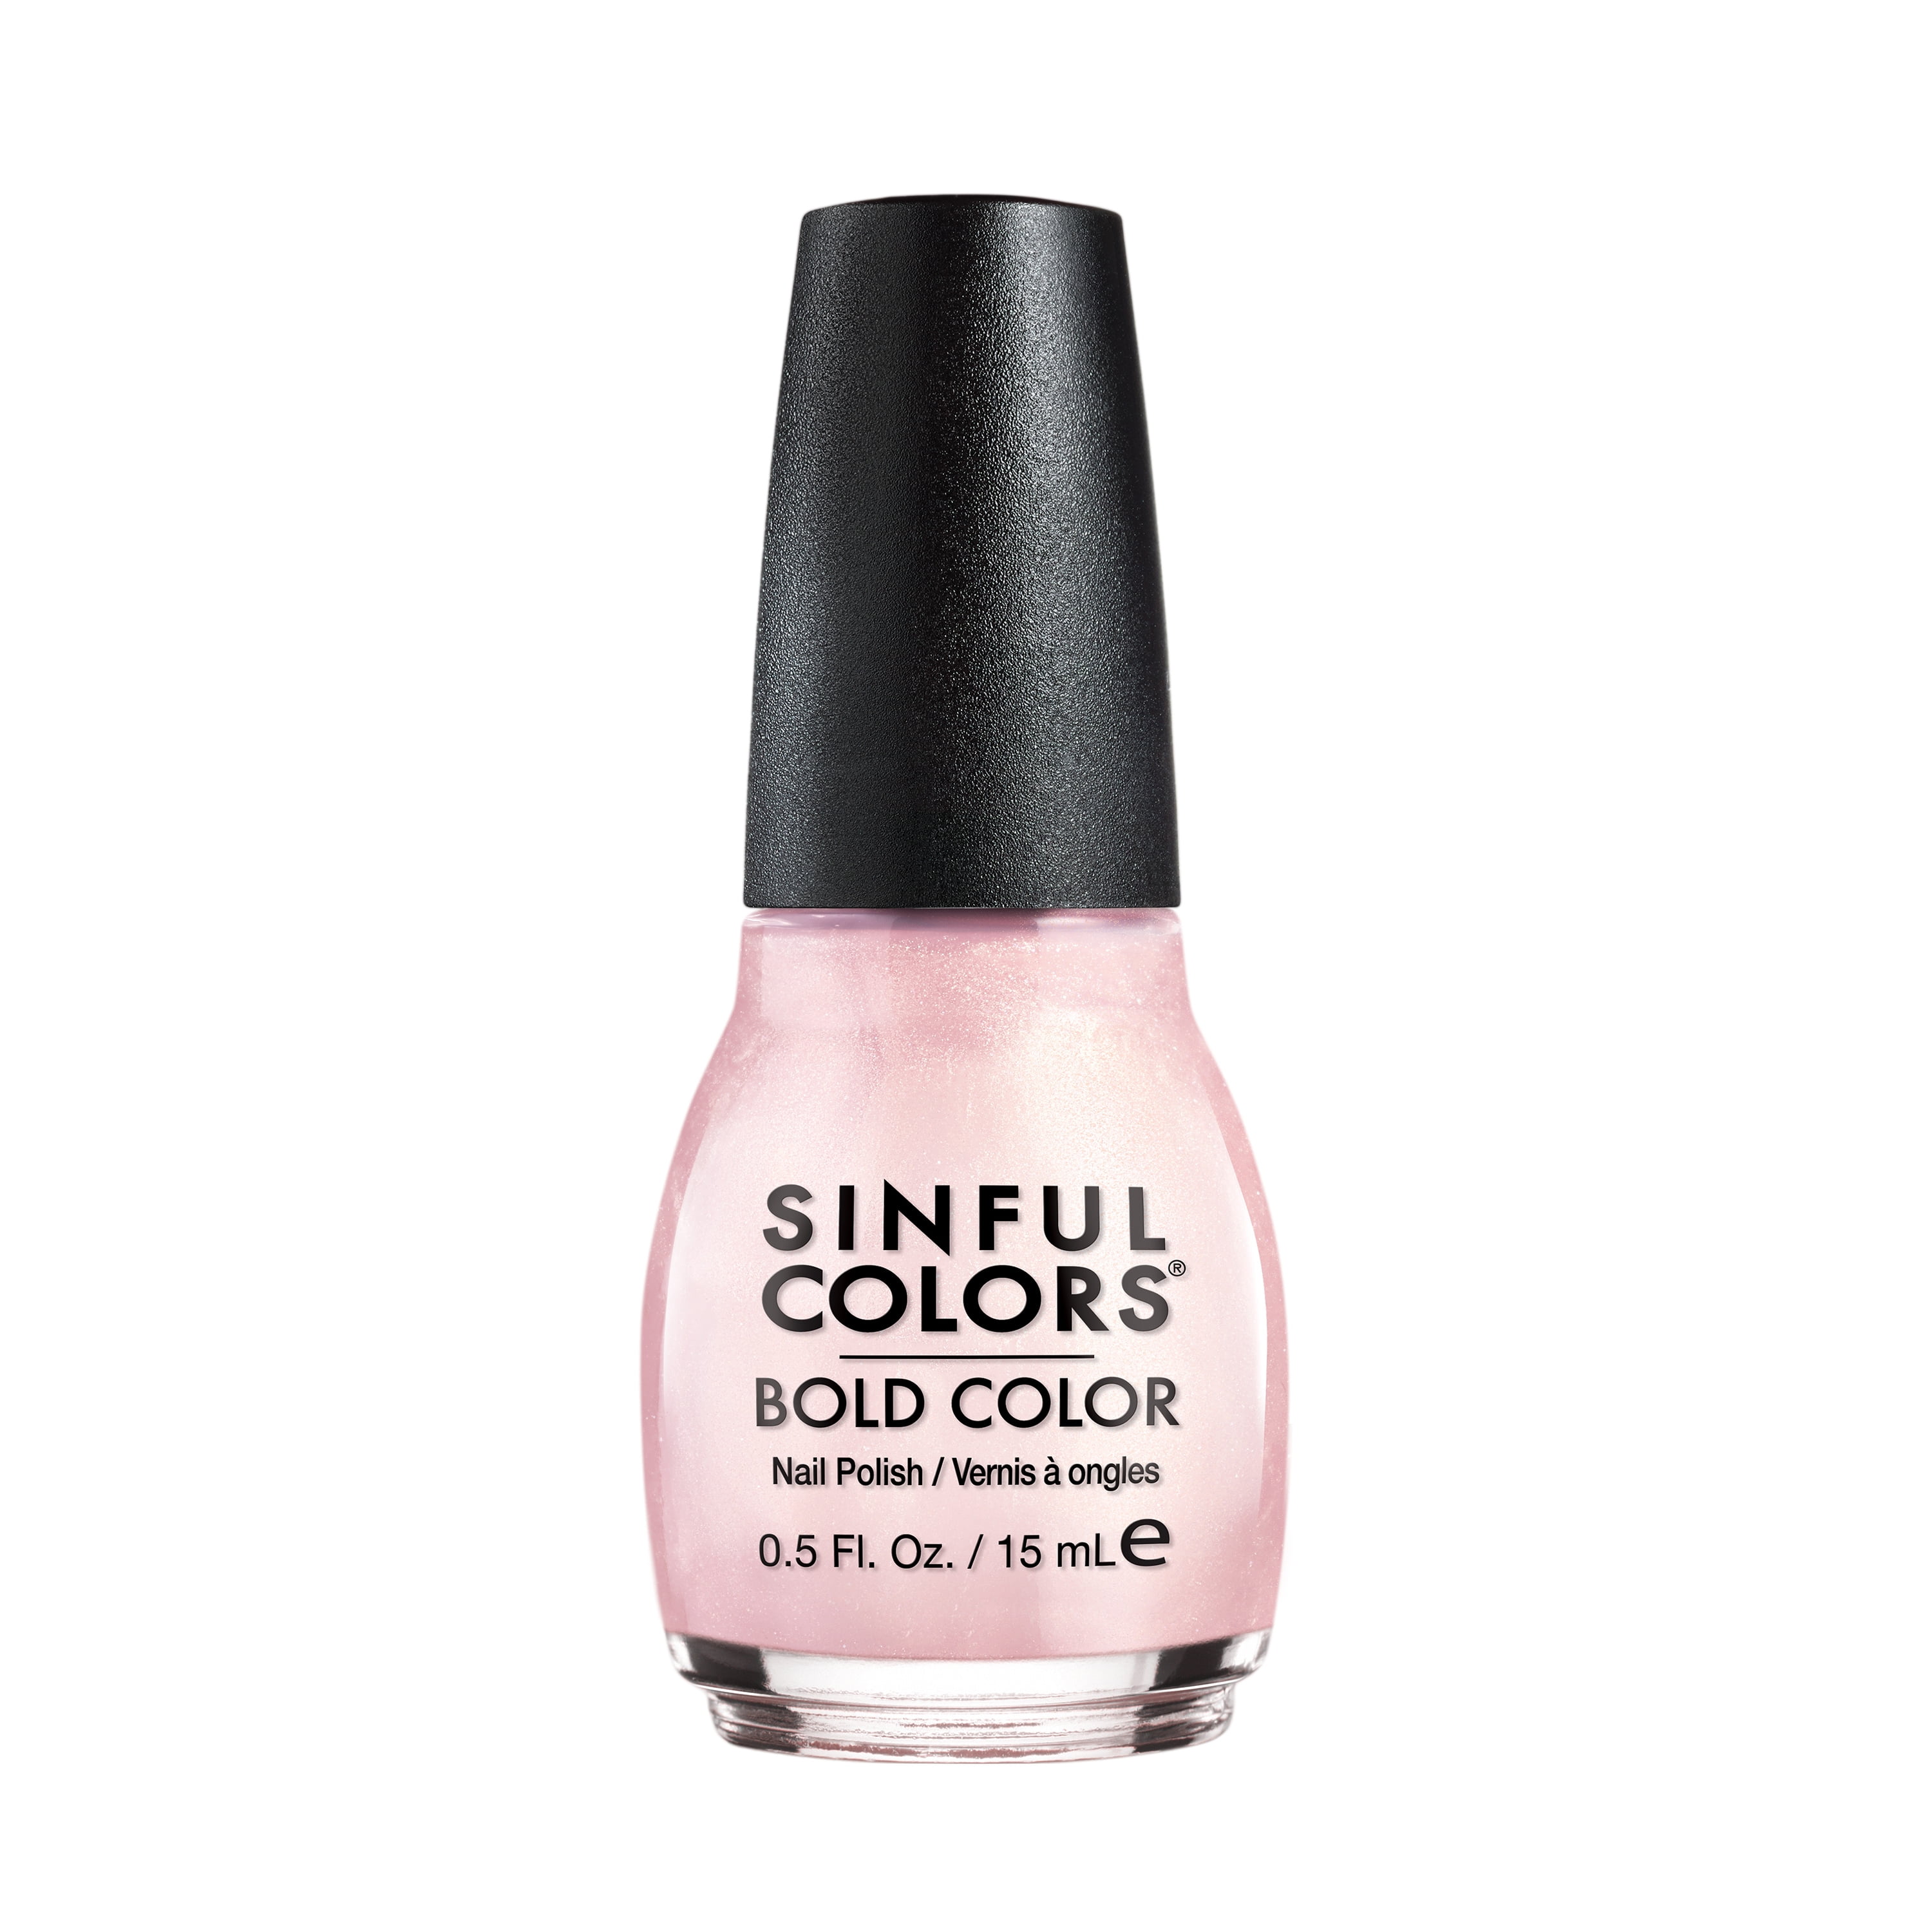  eodci Gel Nail Polish Kit - 6 Colors Popular Nude Pink